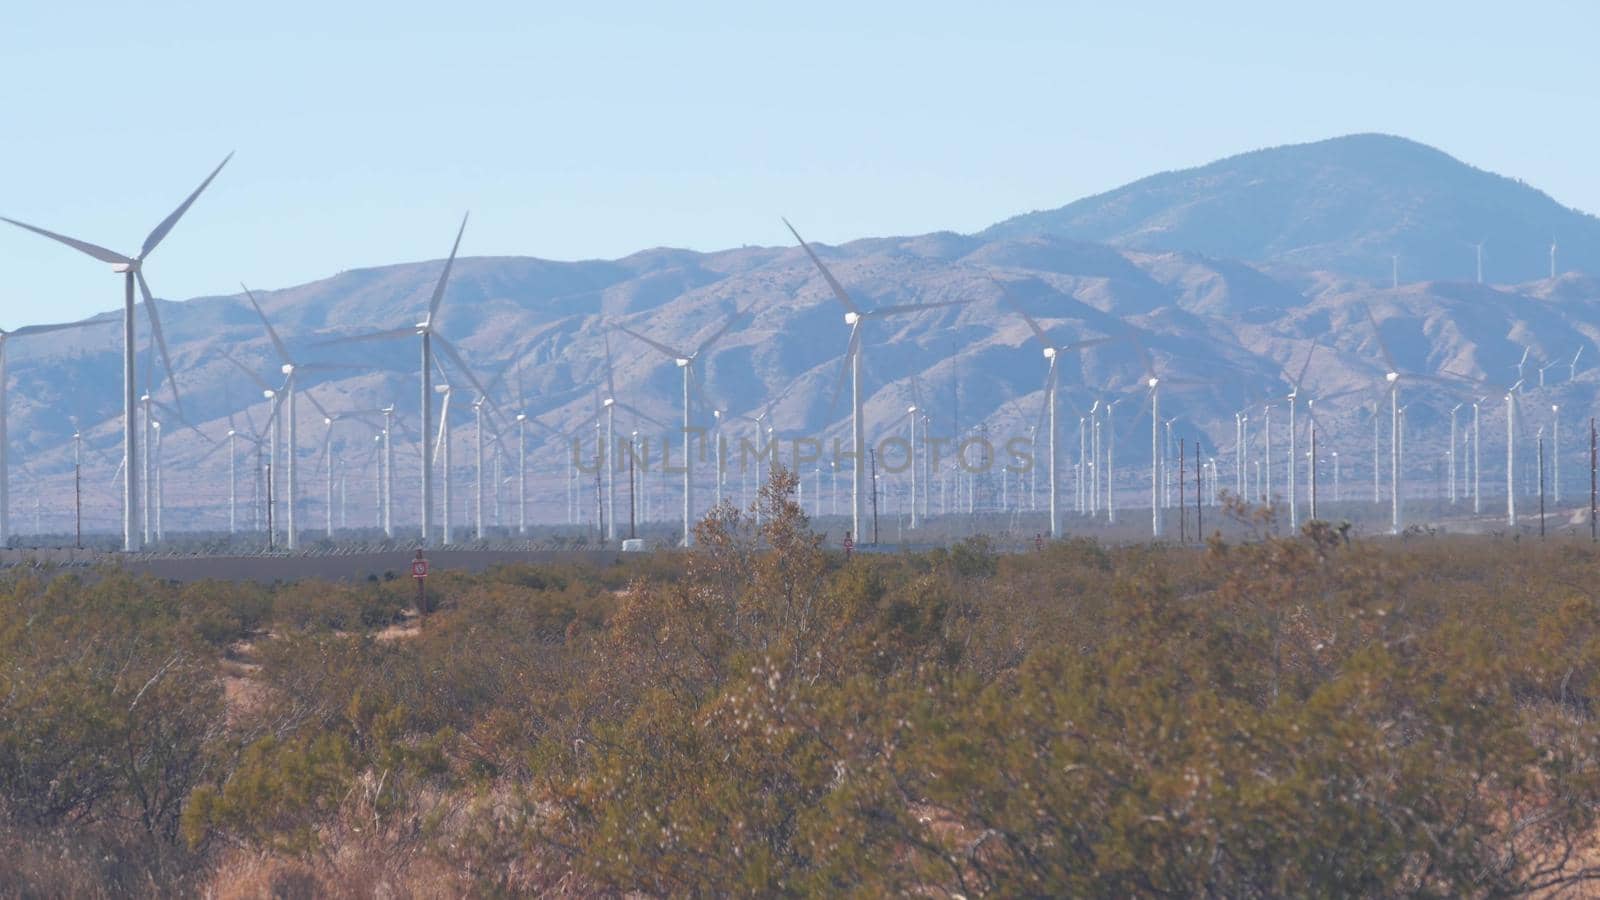 Windmills turbine rotating, wind farm or power plant, alternative green renewable energy generators, industrial field in California, Mojave desert, Tehachapi, USA. Electricity generation on windfarm.